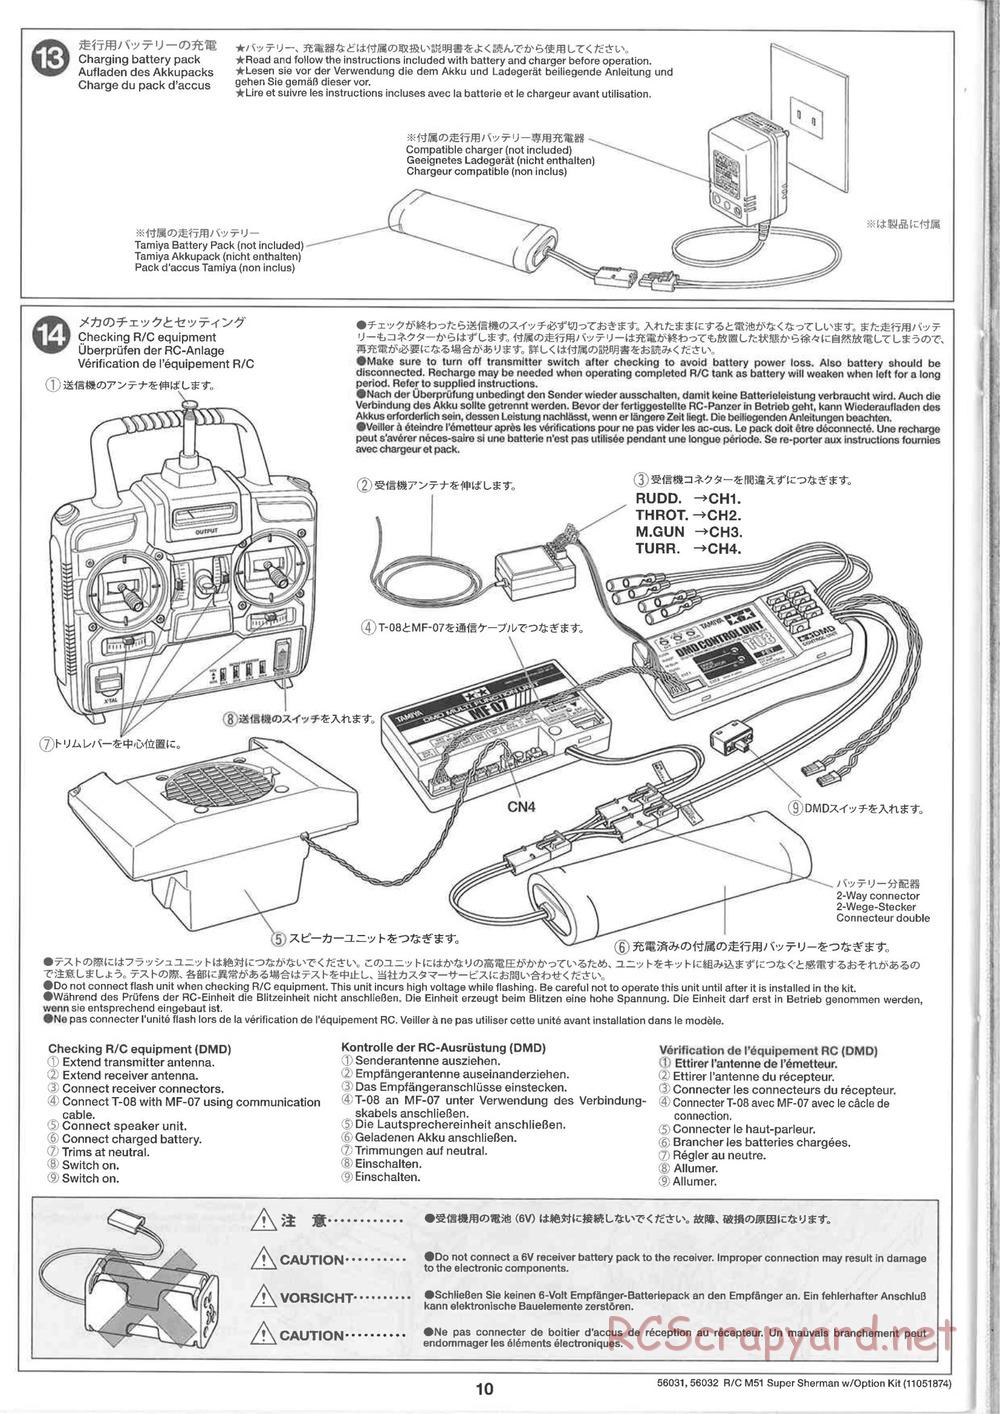 Tamiya - Super Sherman M-51 - 1/16 Scale Chassis - Manual - Page 10